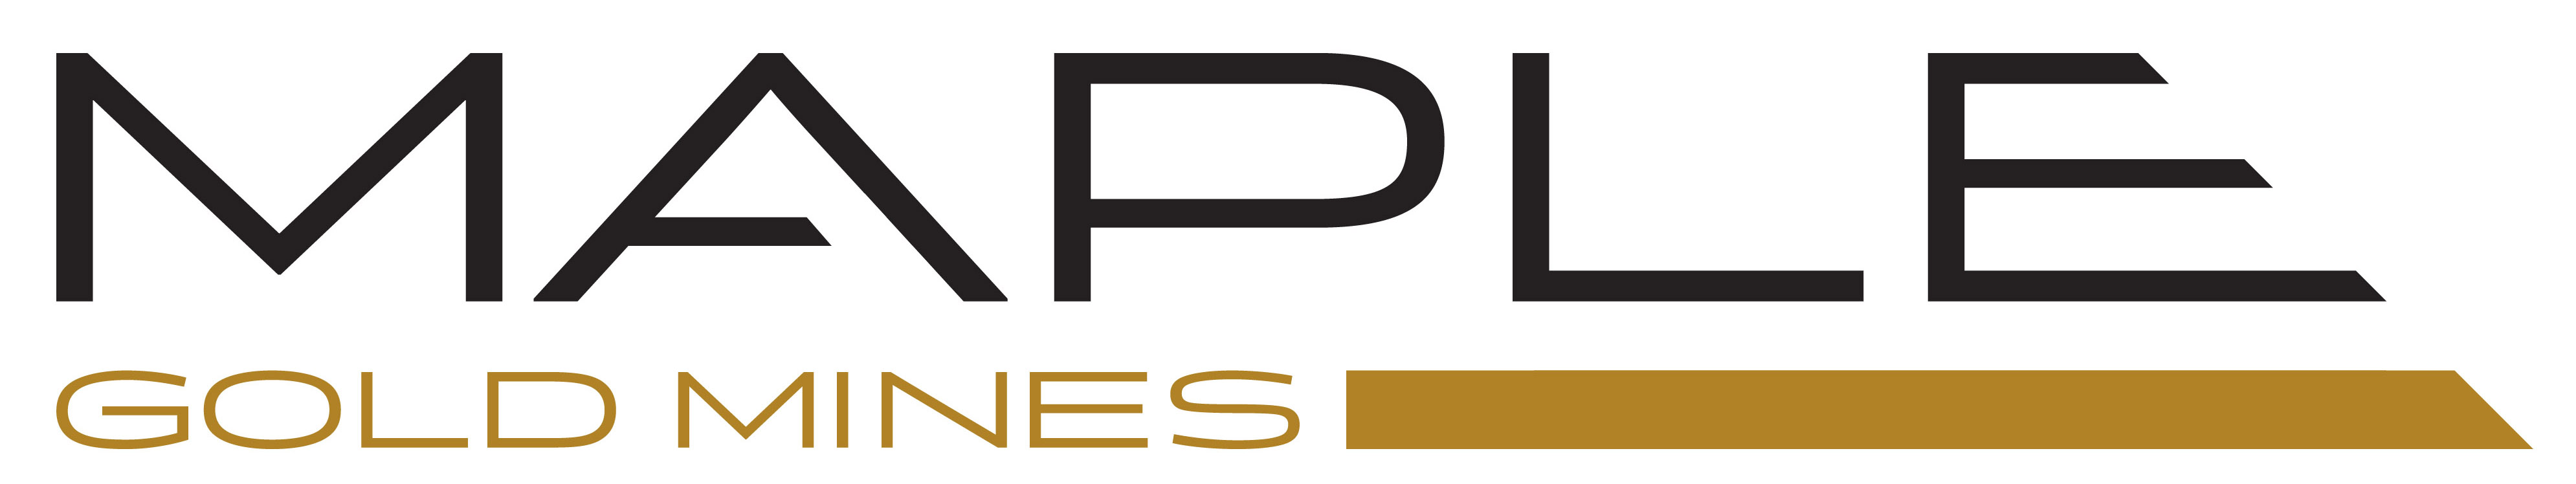 maple gold mines logo